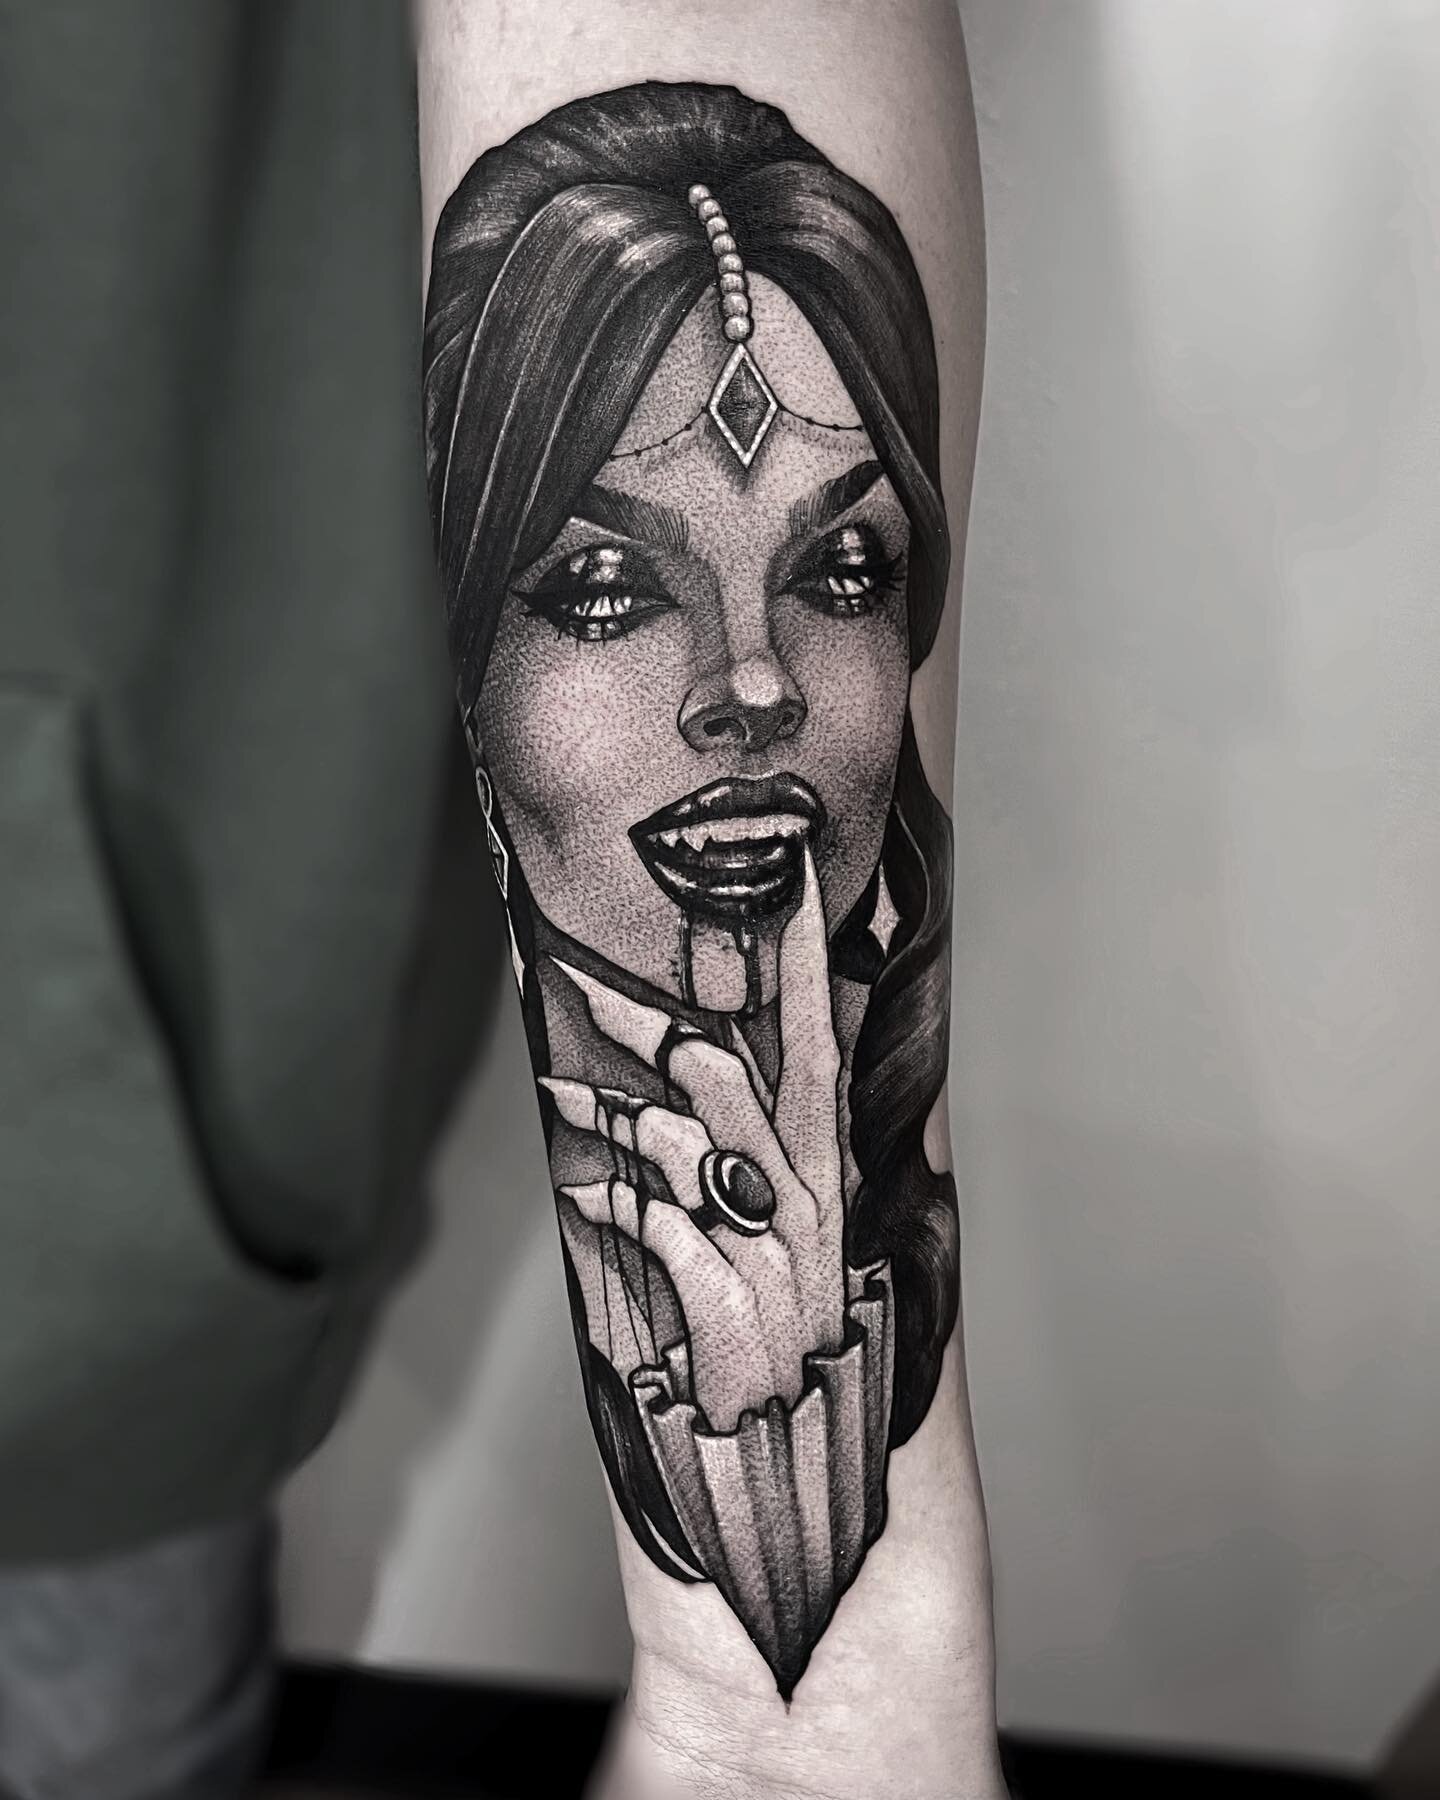 Vampire lady 🖤🩸 More please!
✖️ Done at @sharktooth_tattoo ✖️
.
.
.
.
@industryinks
@hivecaps 
@empireinks 
@goodguysupply 
.
.
.
.
.
.
.
.
.
.
.
.
.
.
#tattoo #tattoos #tattooartist #tattooed #tattooist #blackworkers #blackworker #linework #linewo